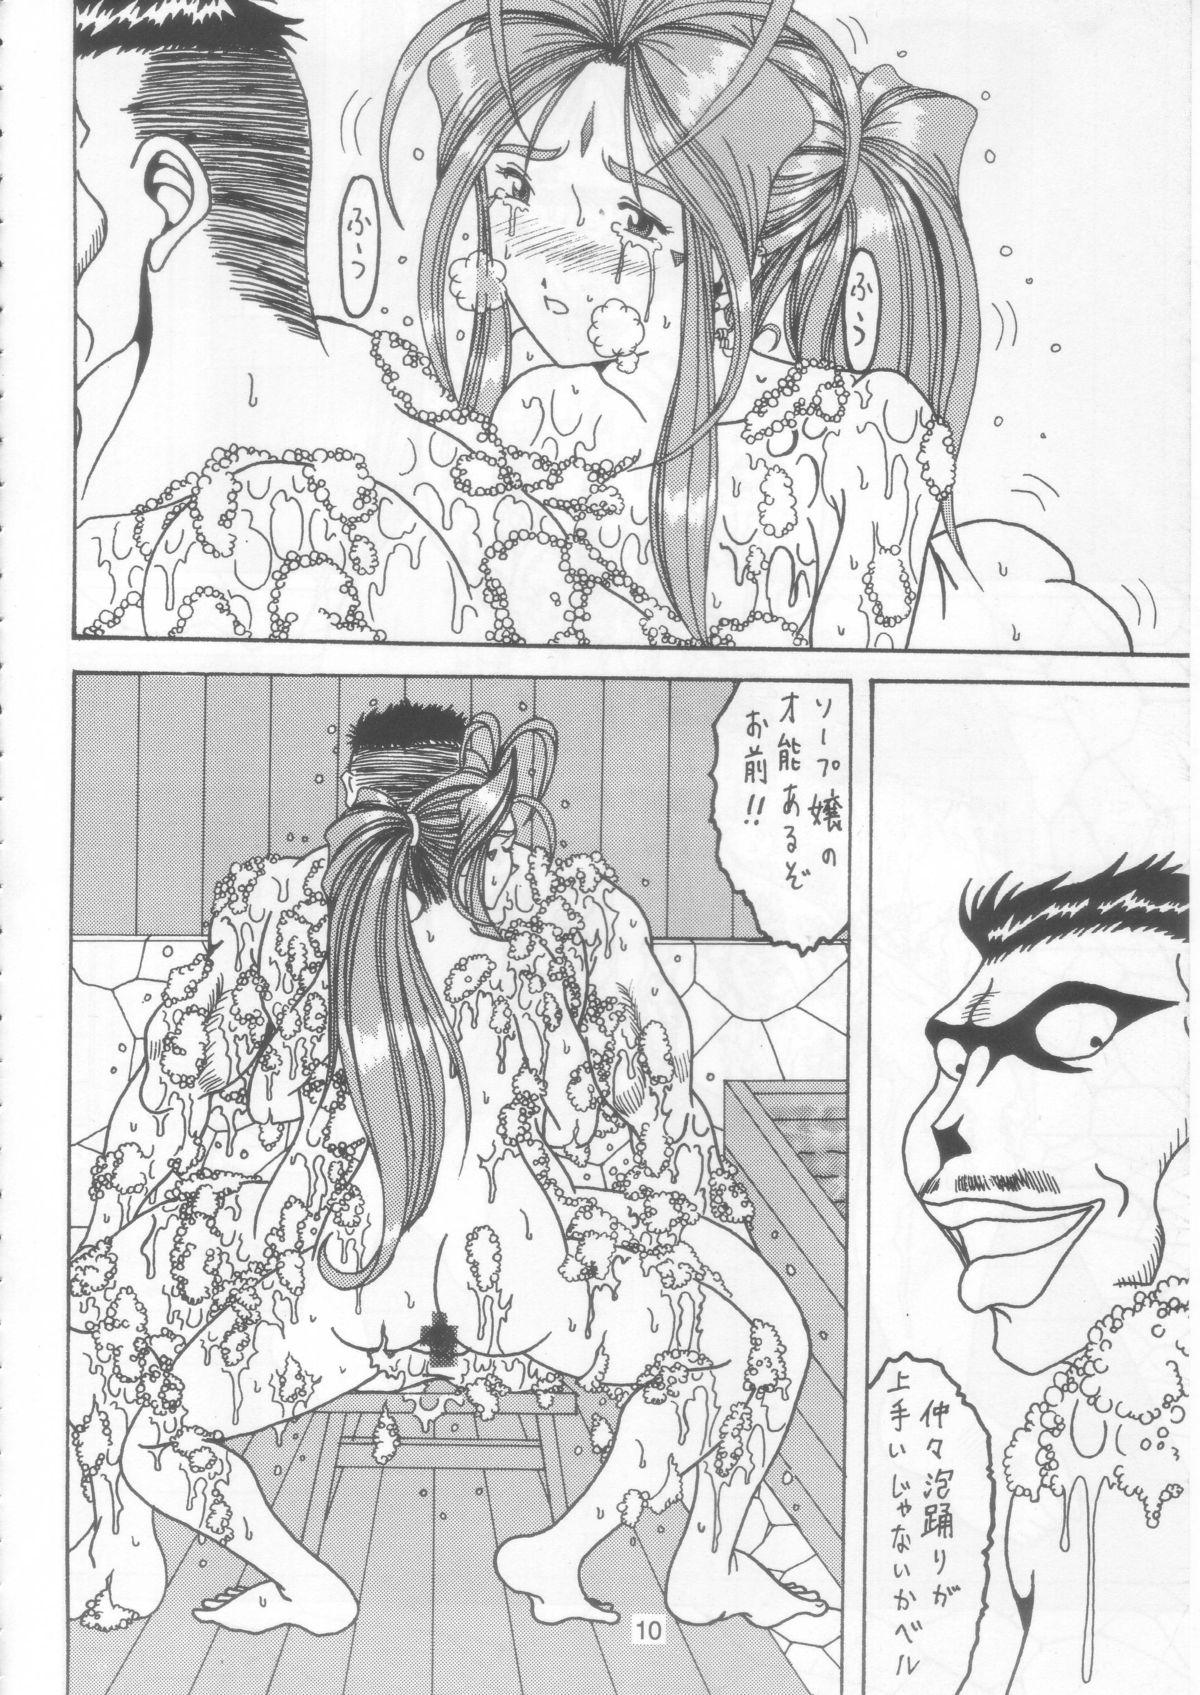 Slapping Yogoreta Kao no Megami 2 - Ah my goddess Lesbos - Page 9